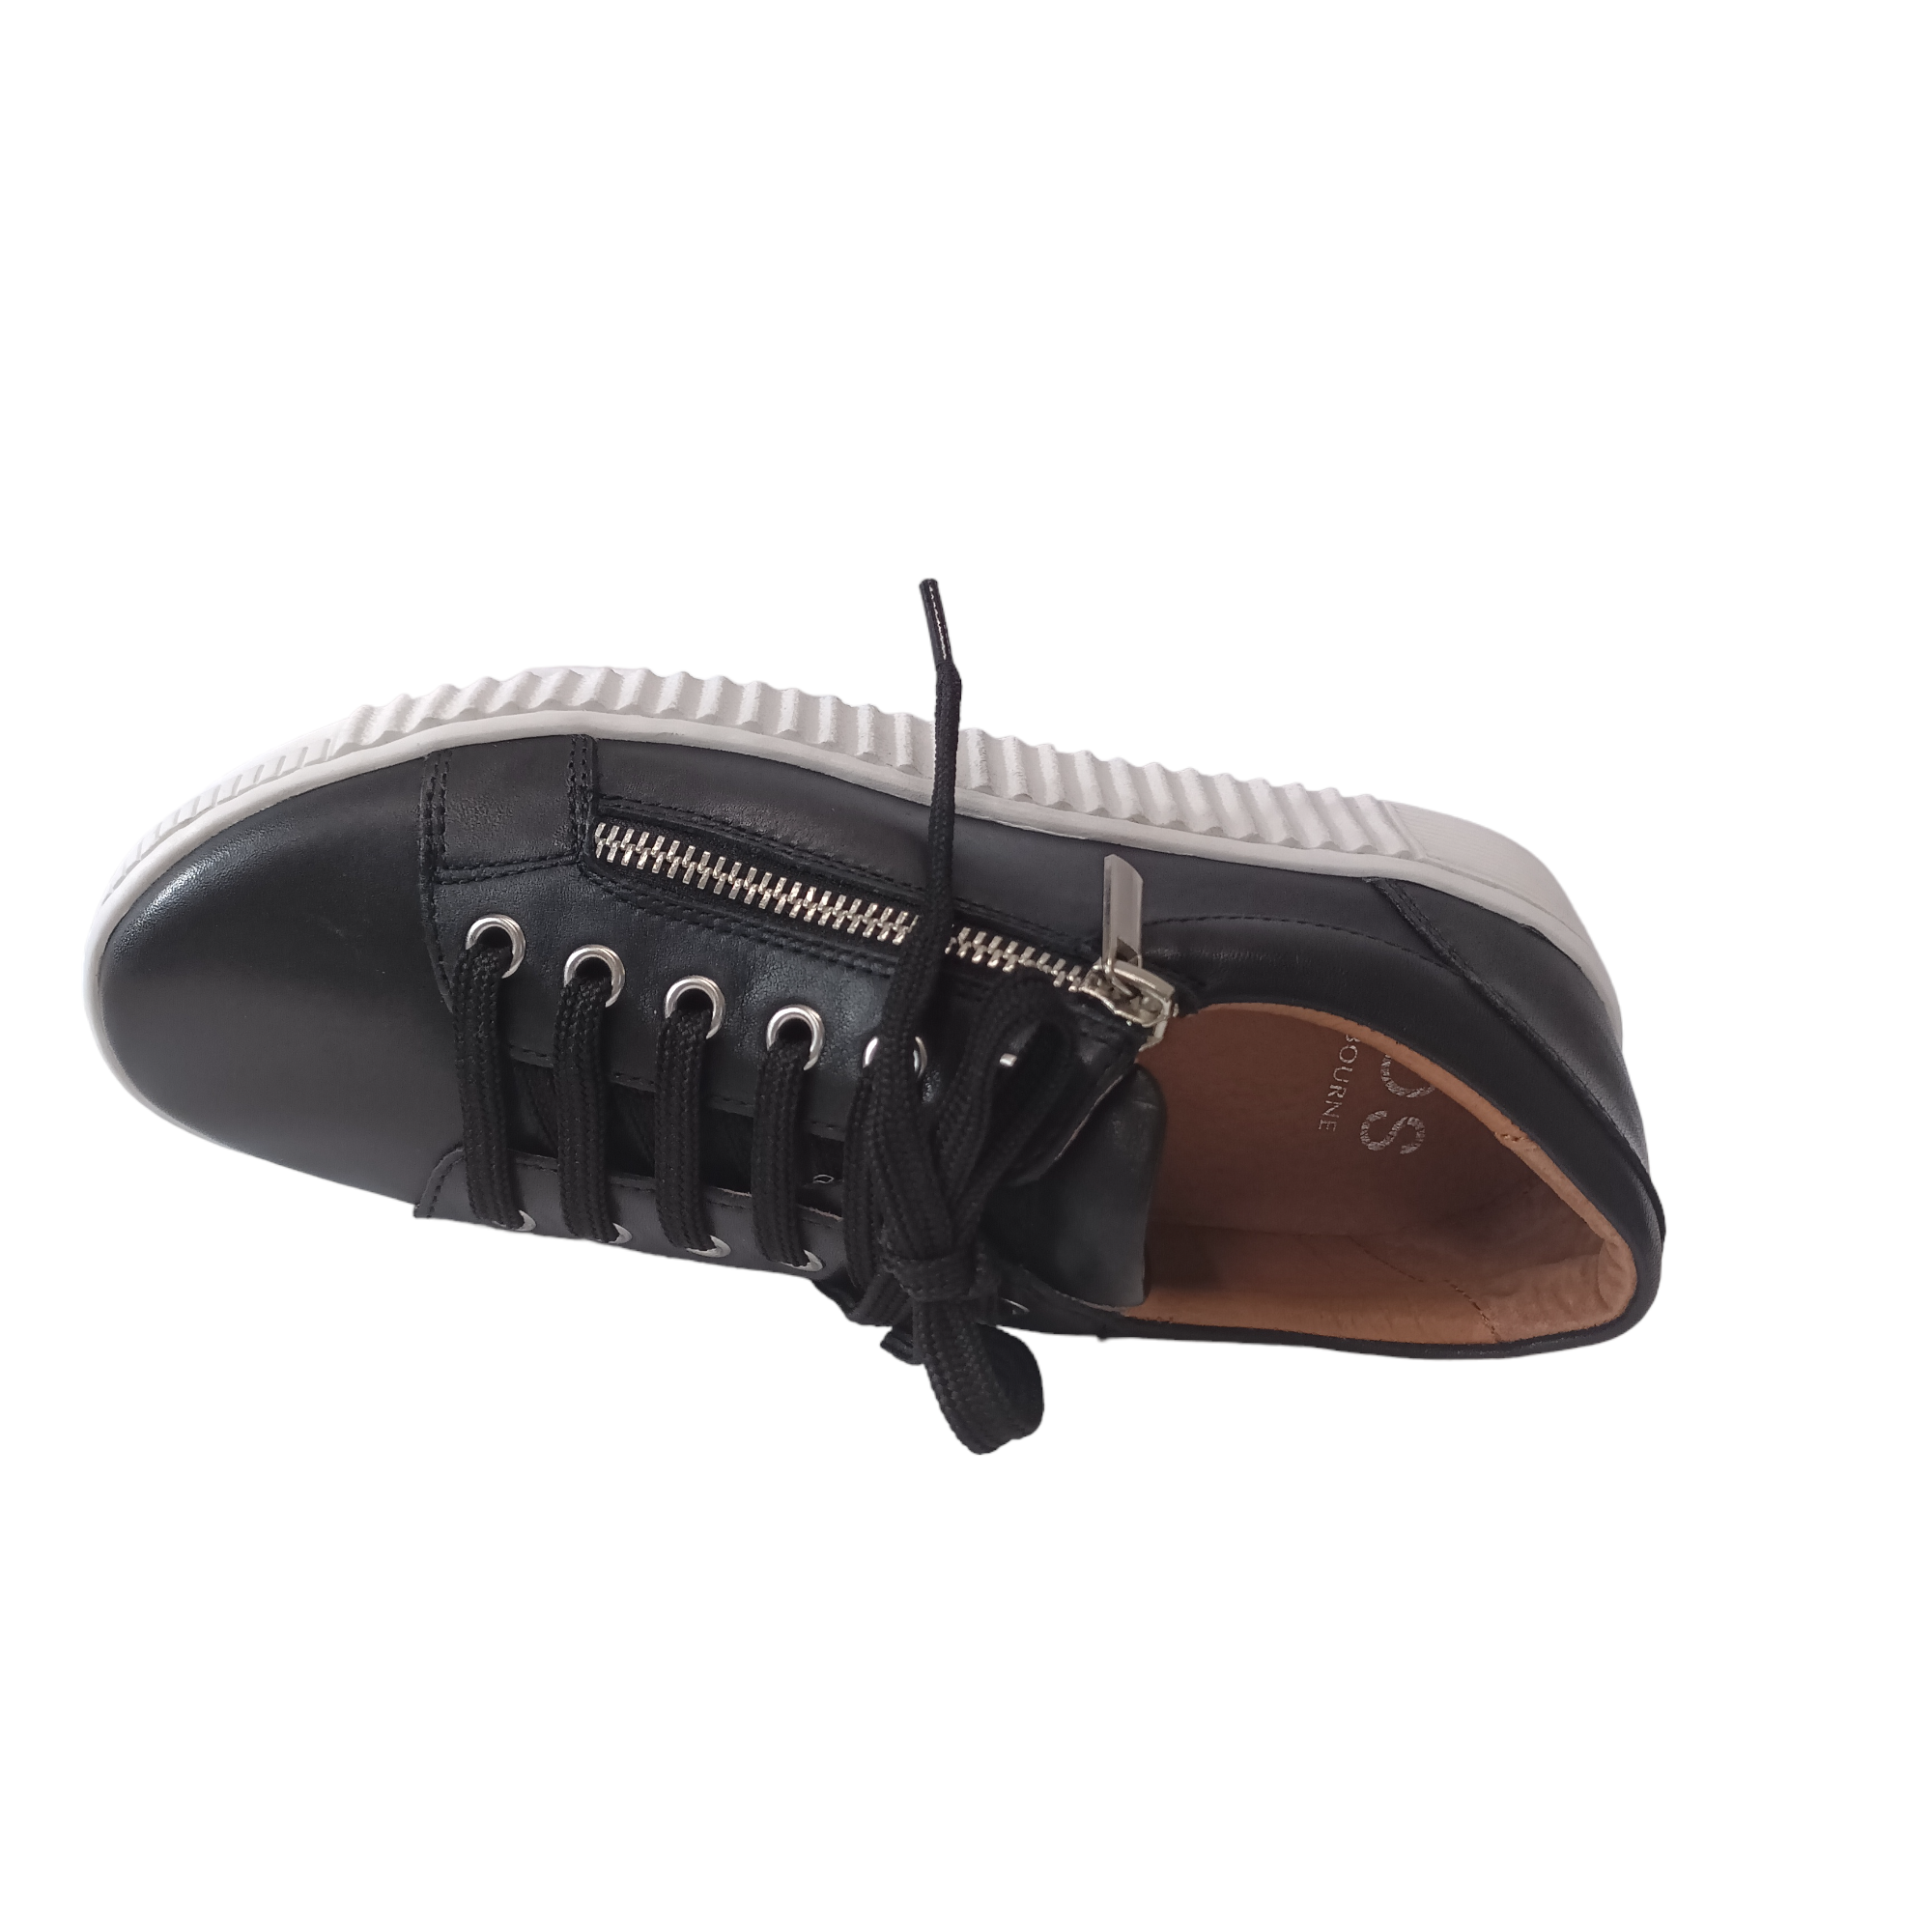 Jovi 2 - shoe&amp;me - EOS - Sneaker - Sneaker, Summer, Womens